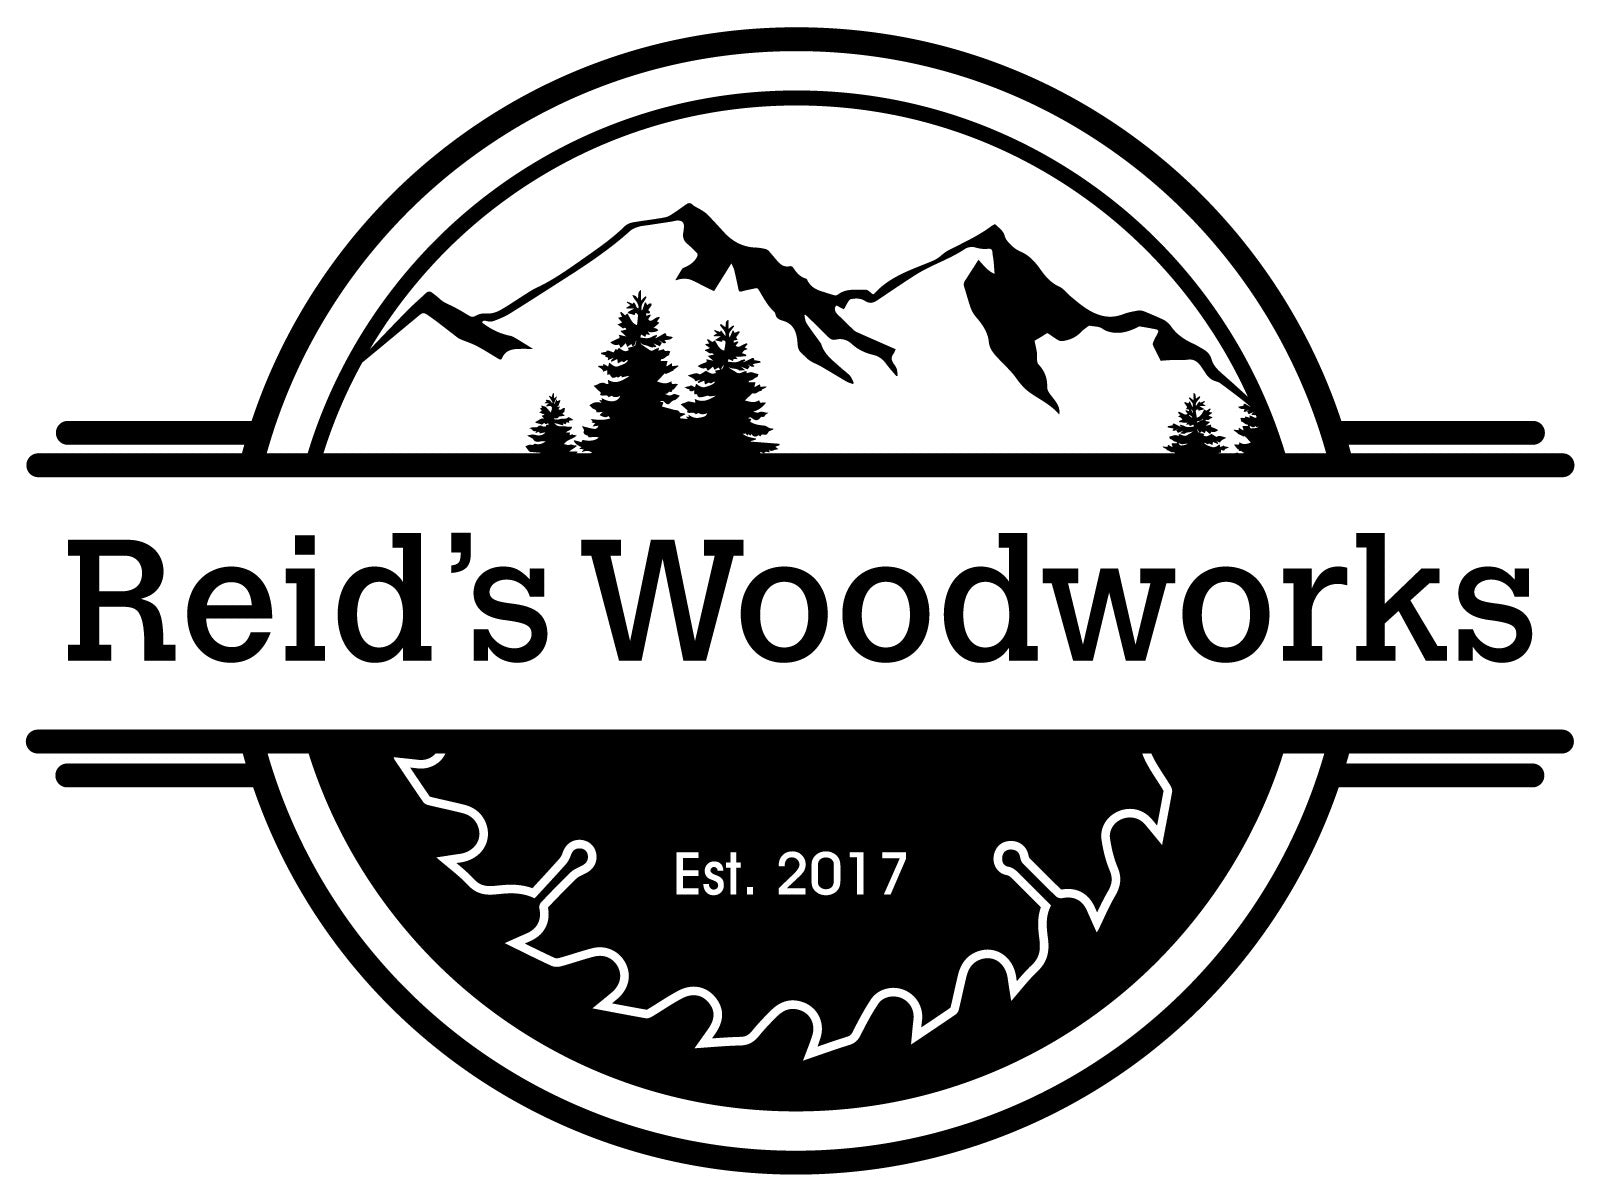 Reid's Woodworks logo